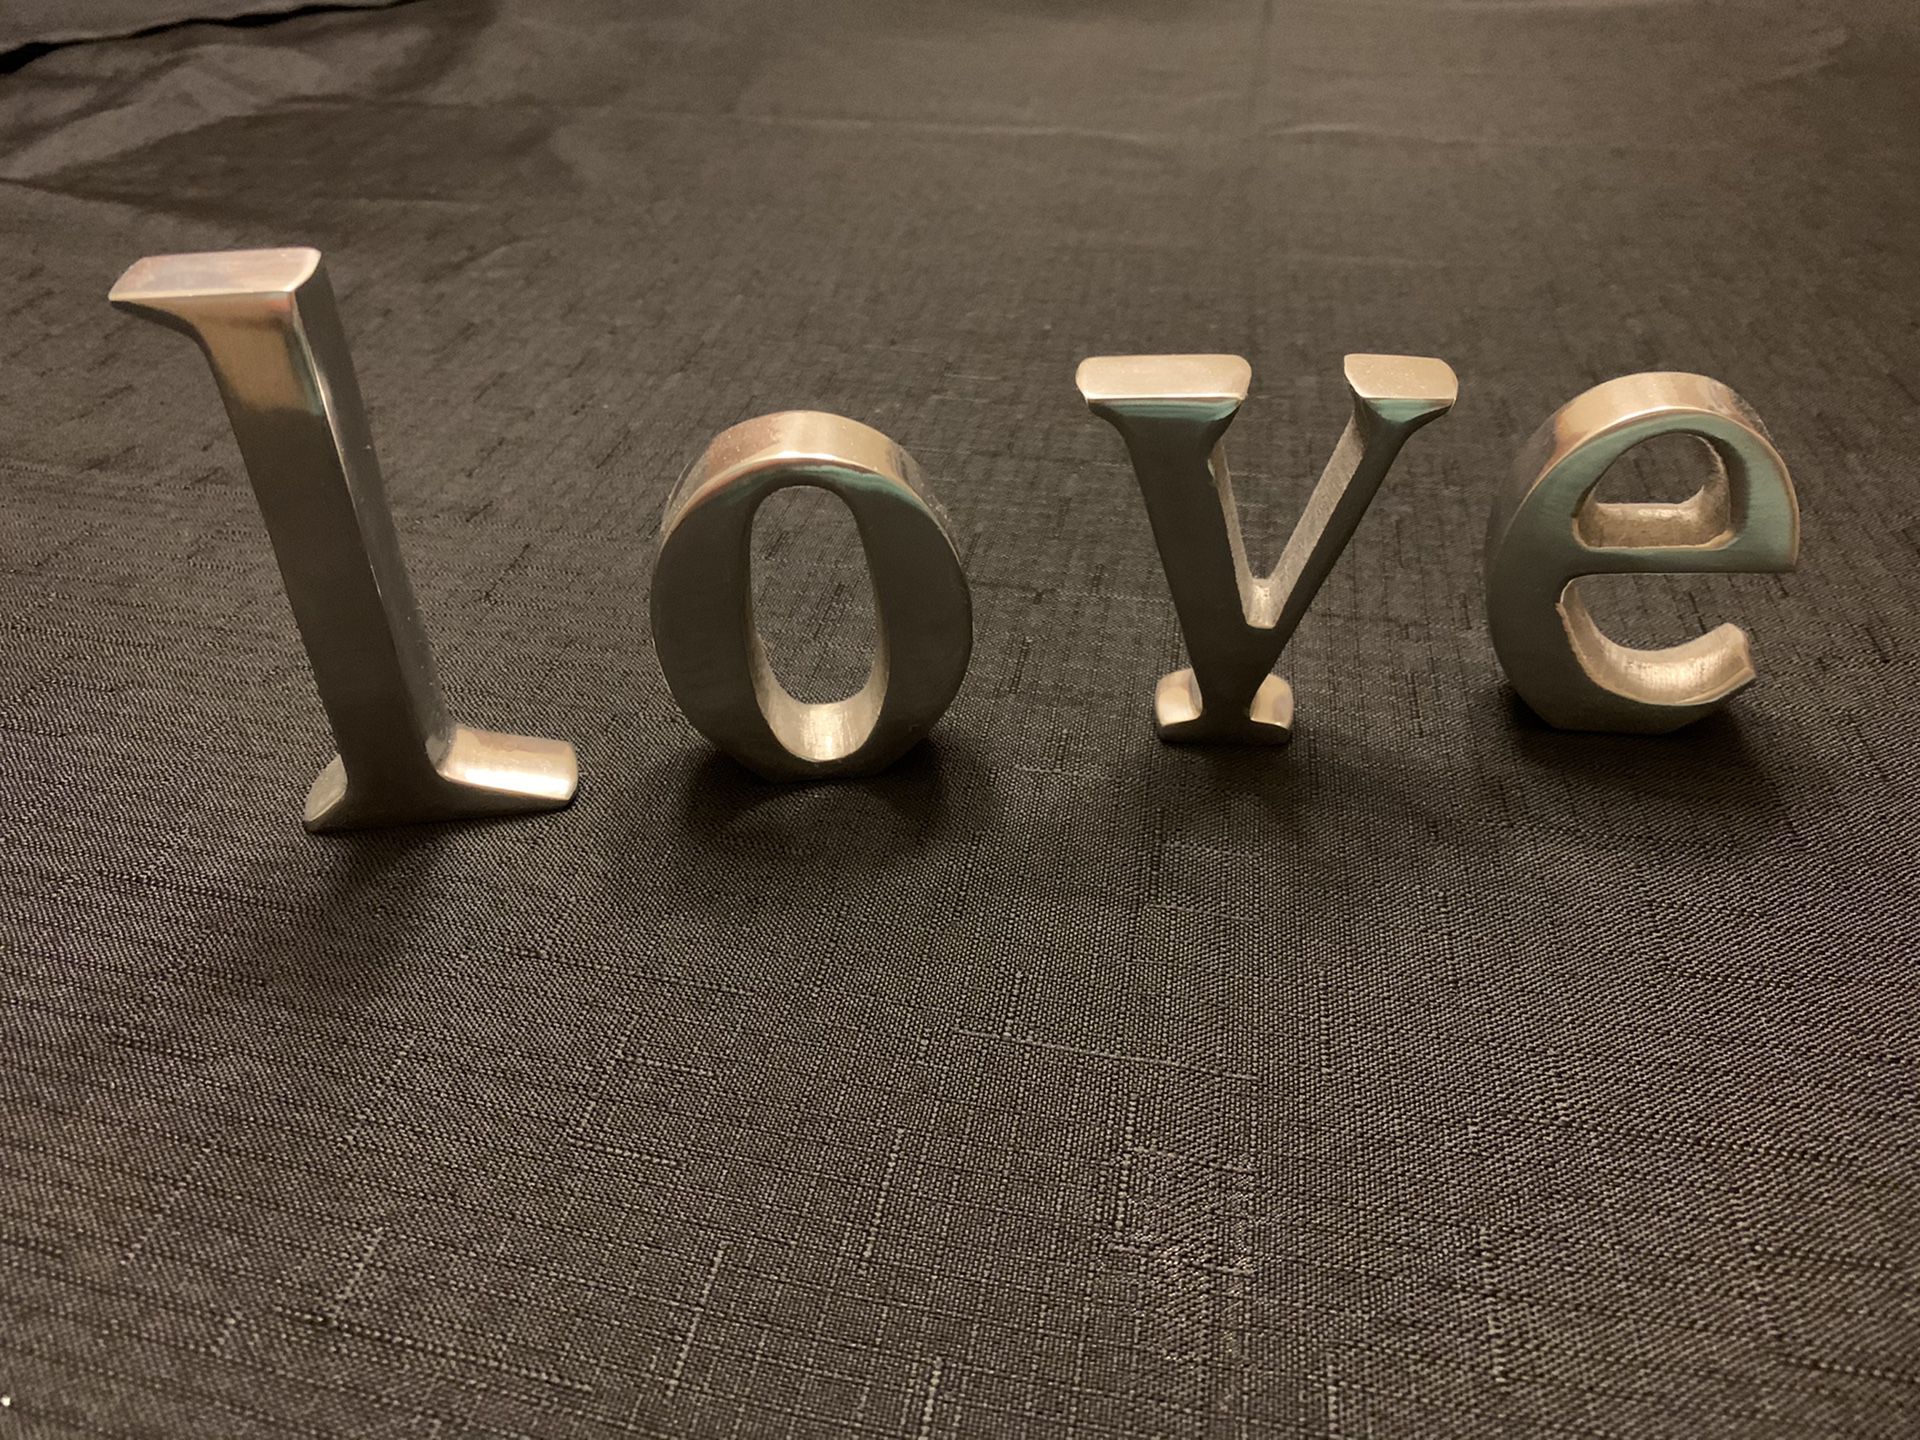 Metal 3” letters